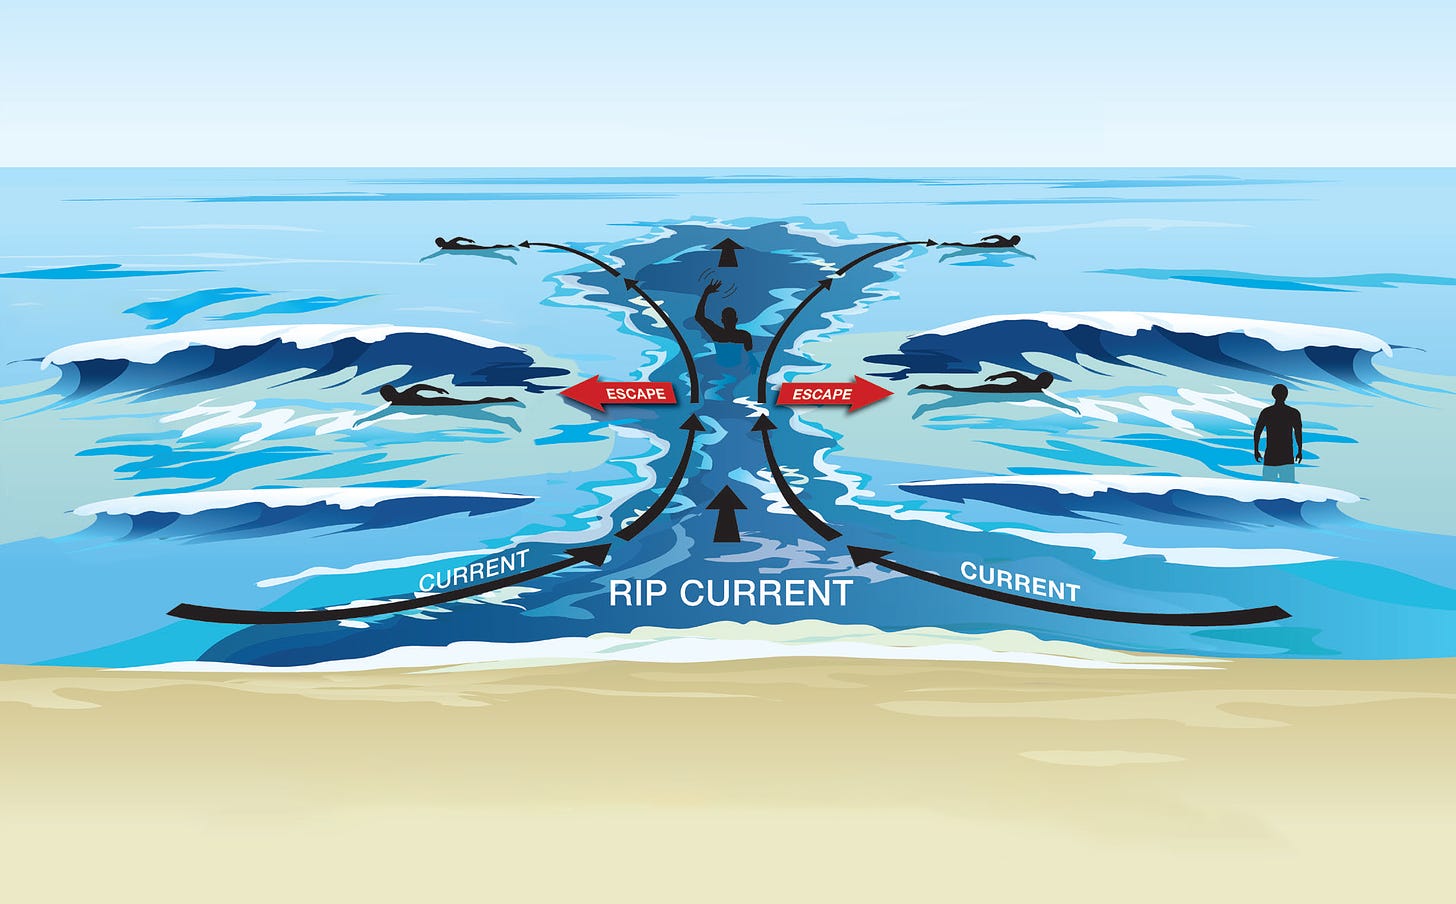 Rip Currents - United States Lifesaving Association